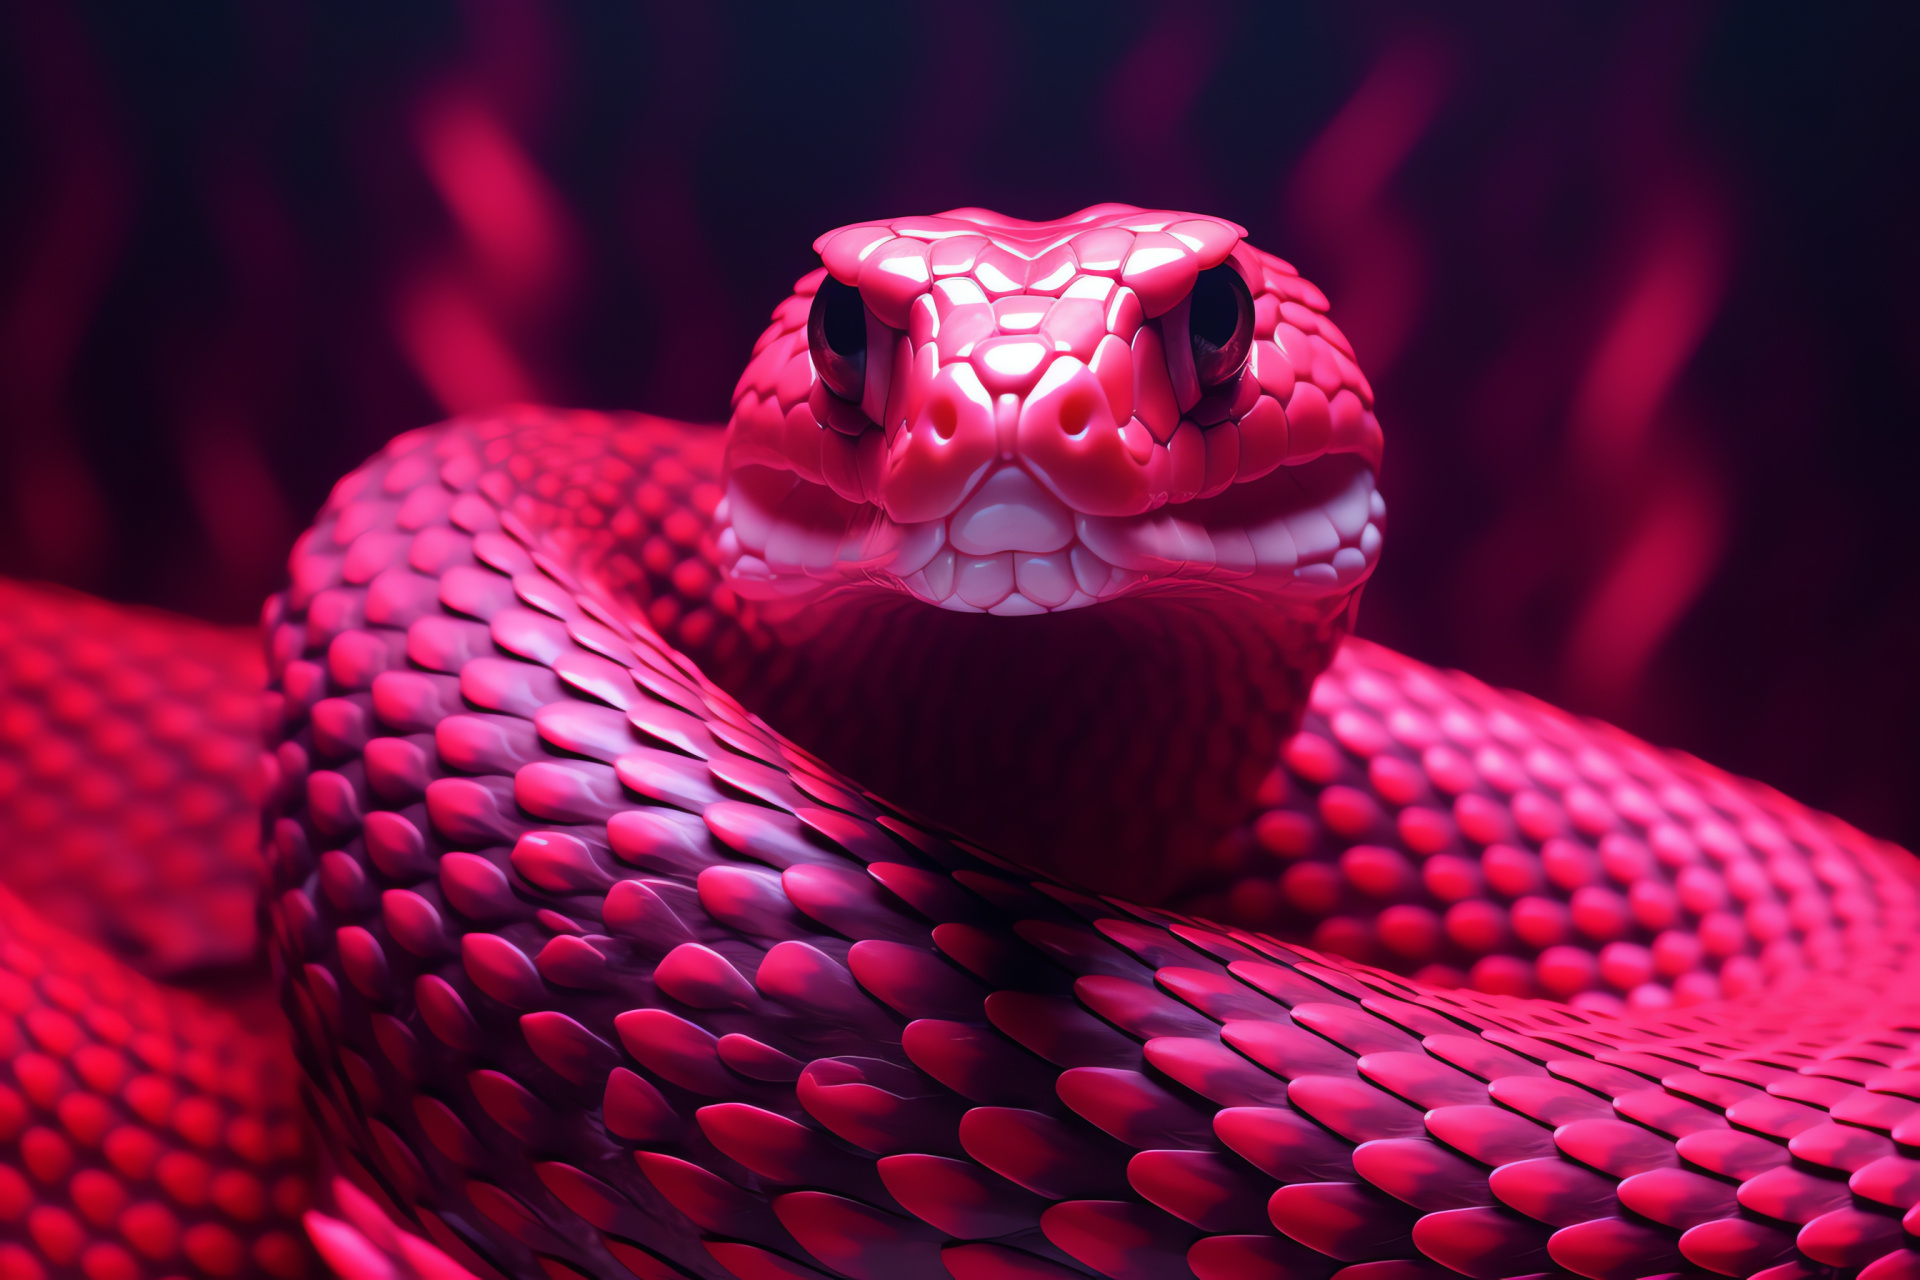 Slithering serpent, neon glimmer, reptilian pink hues, vivid visual impact, dynamic creature, HD Desktop Image